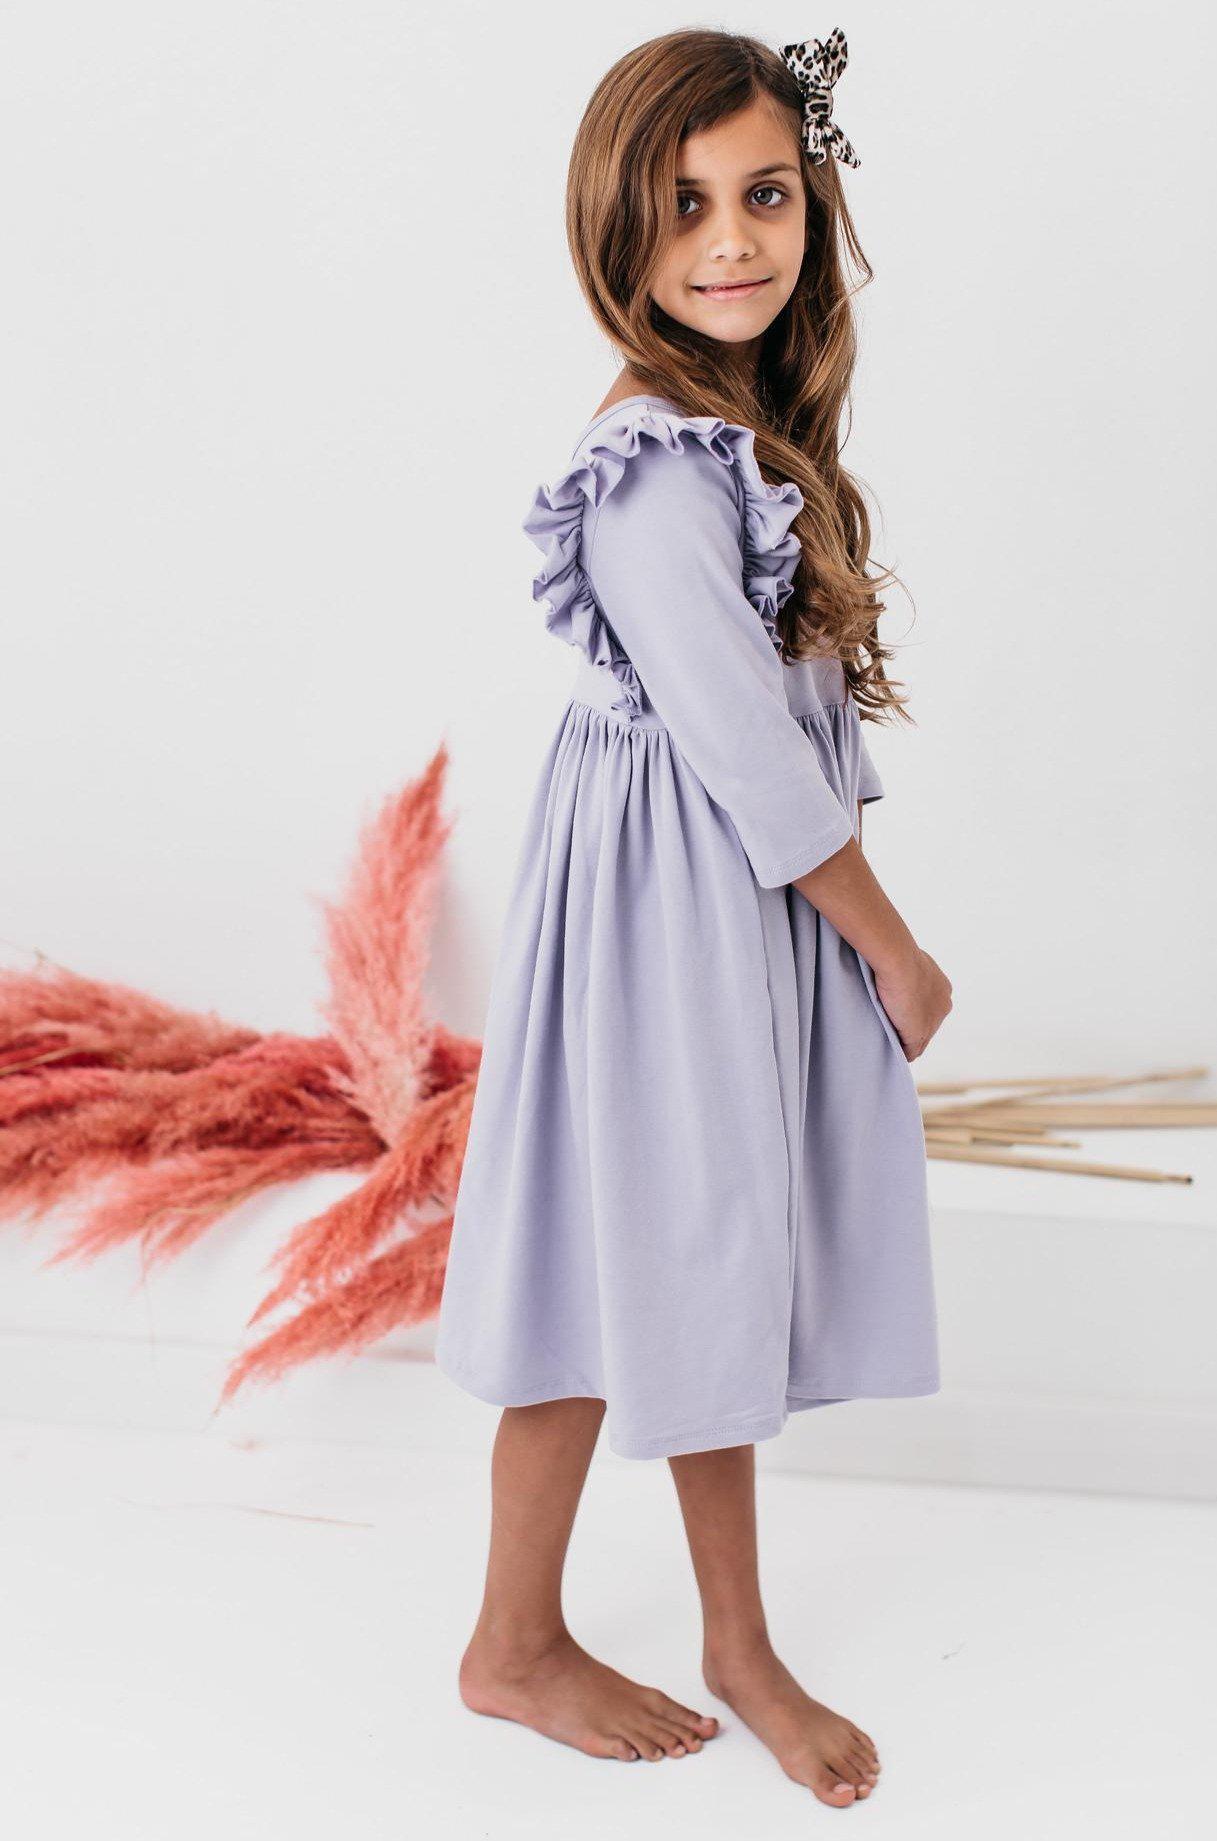 Periwinkle Ruffle Twirl Dress  - Doodlebug's Children's Boutique